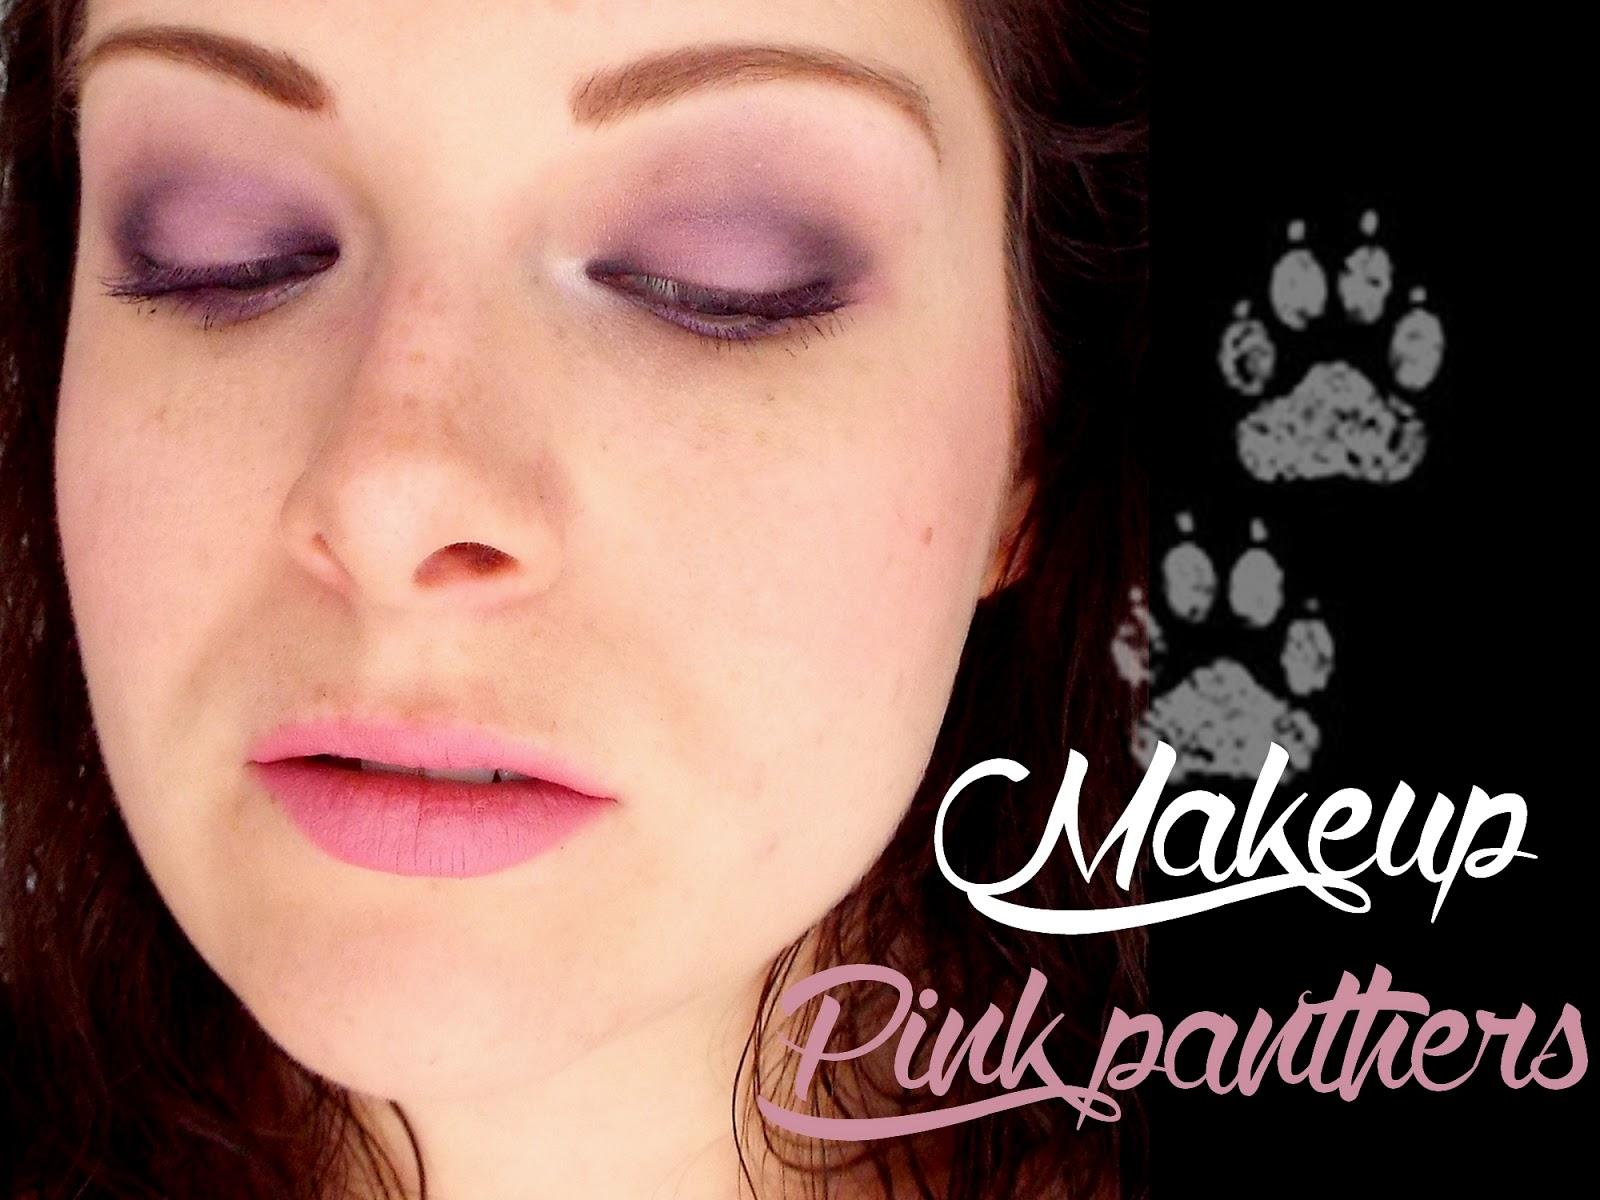 Makeup Pink Panthers avec la Cat eyes